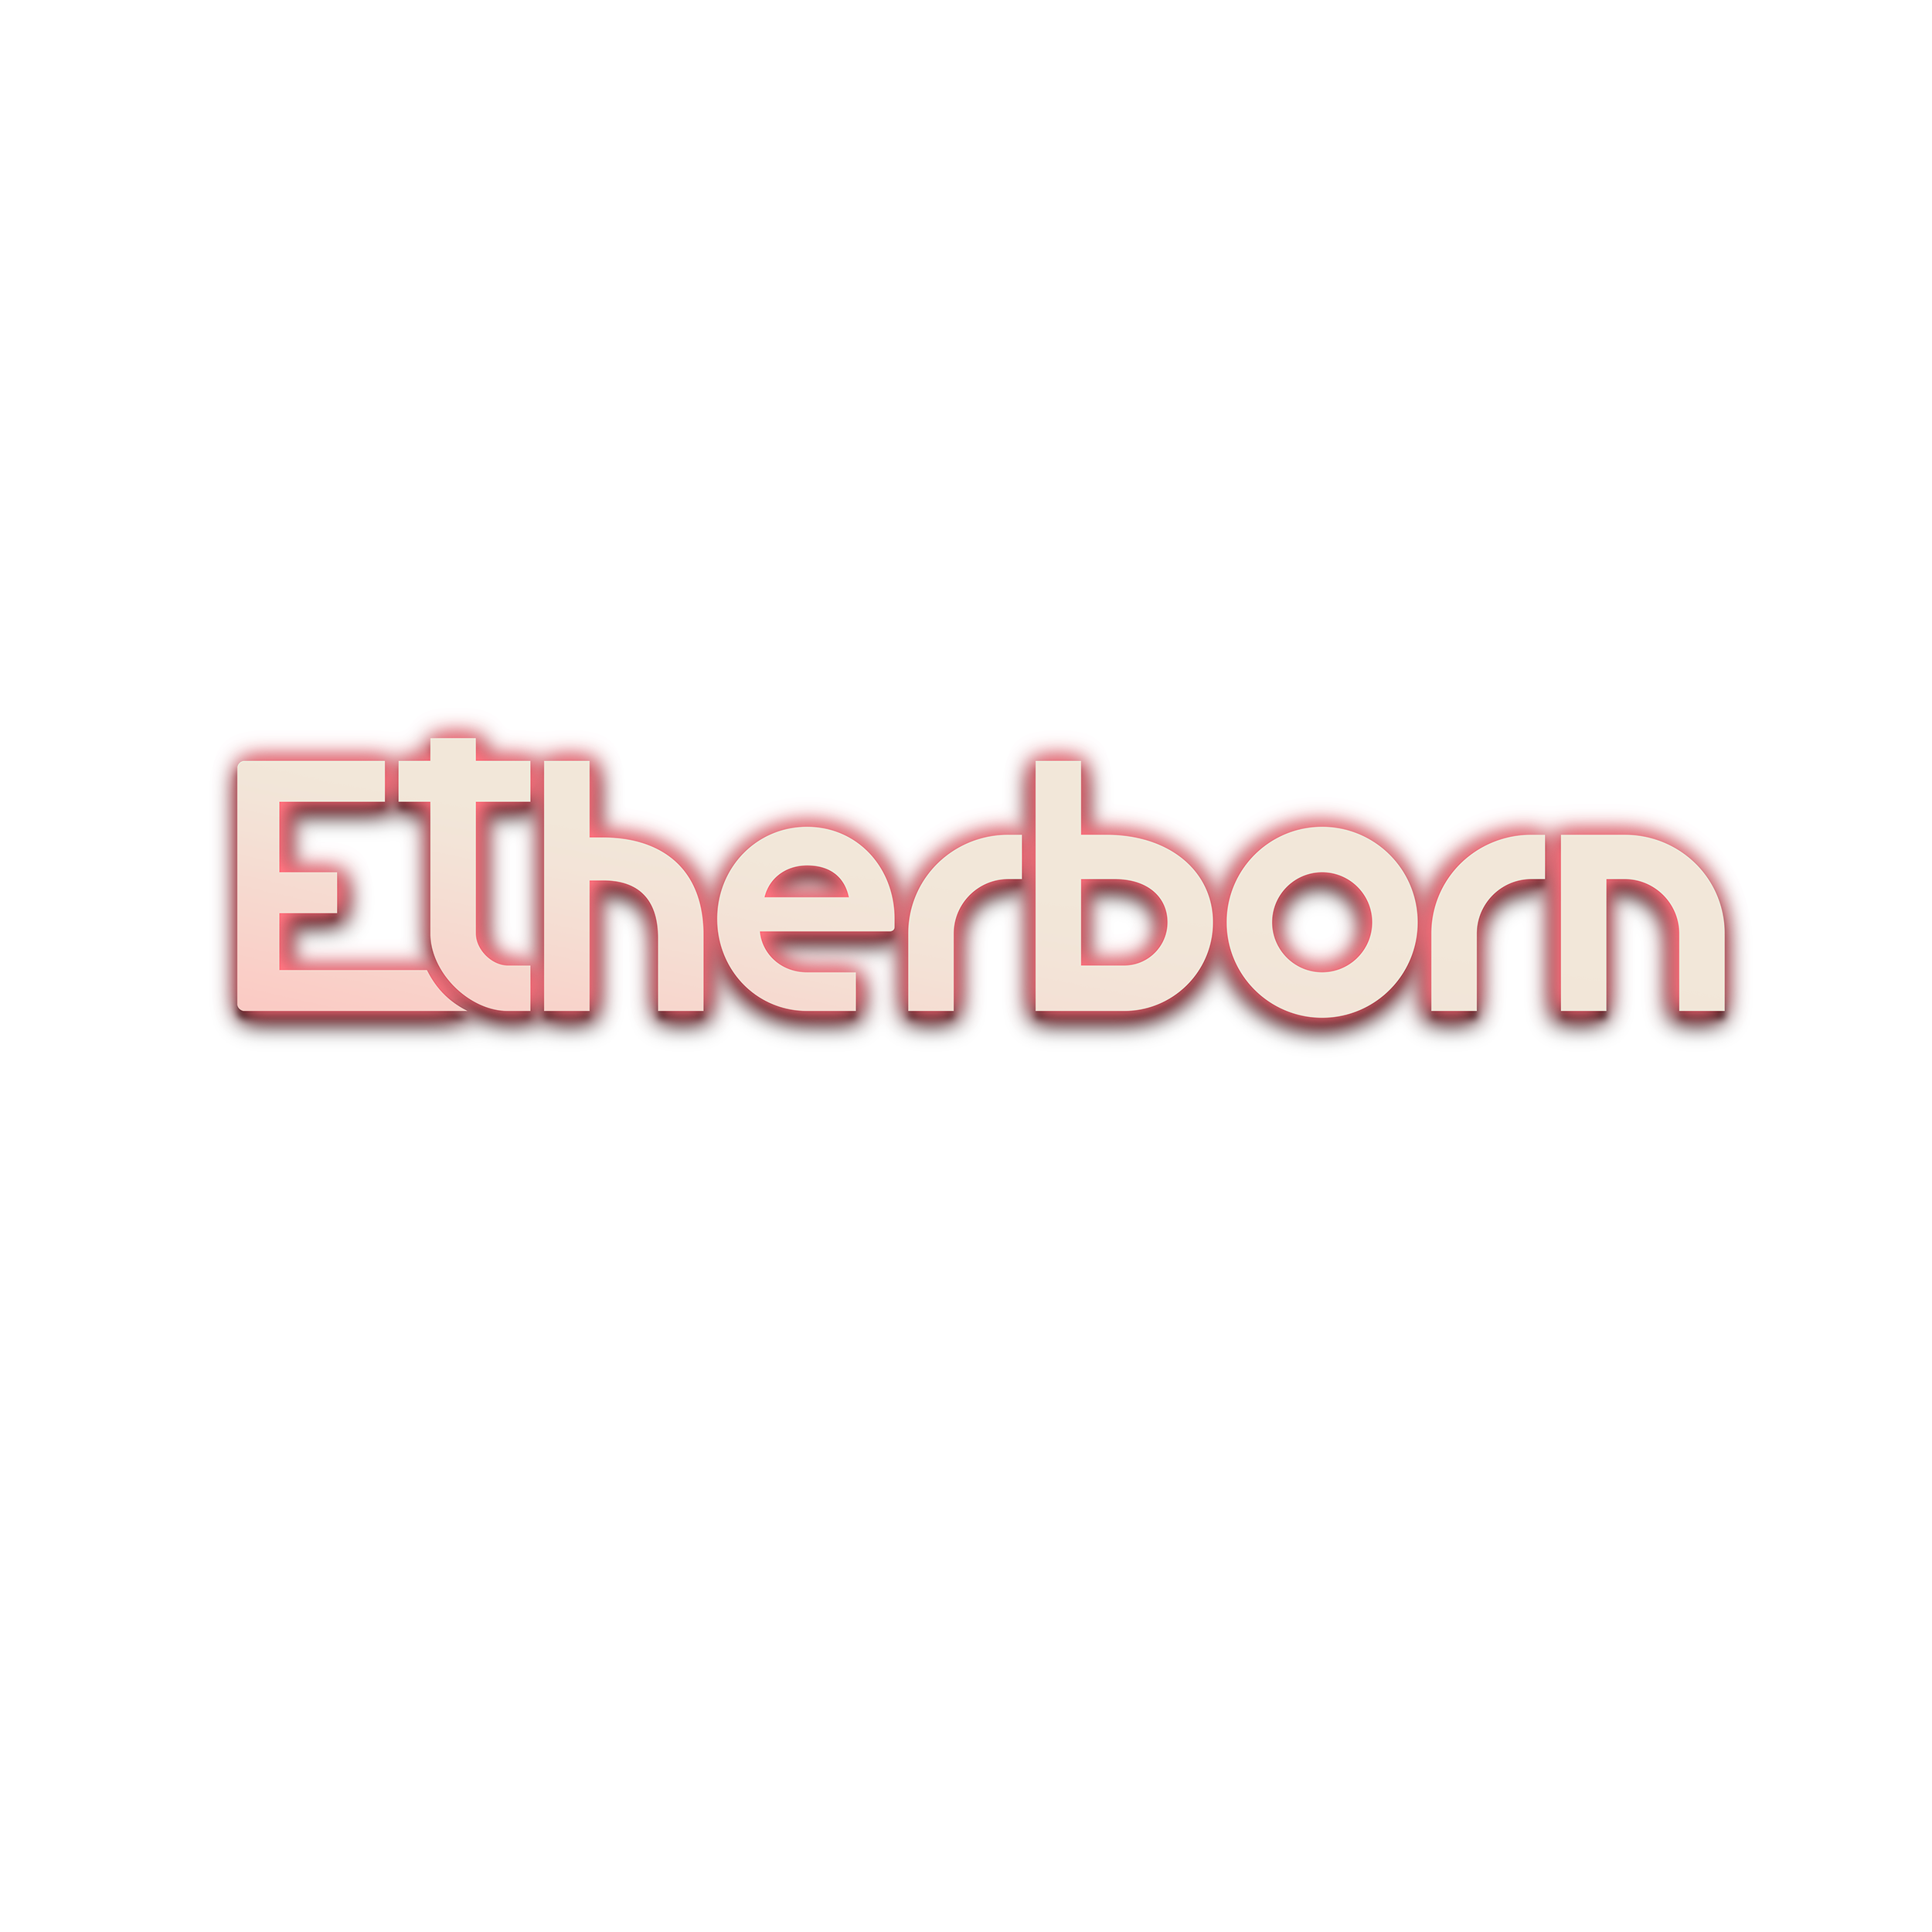 Etherborn logo